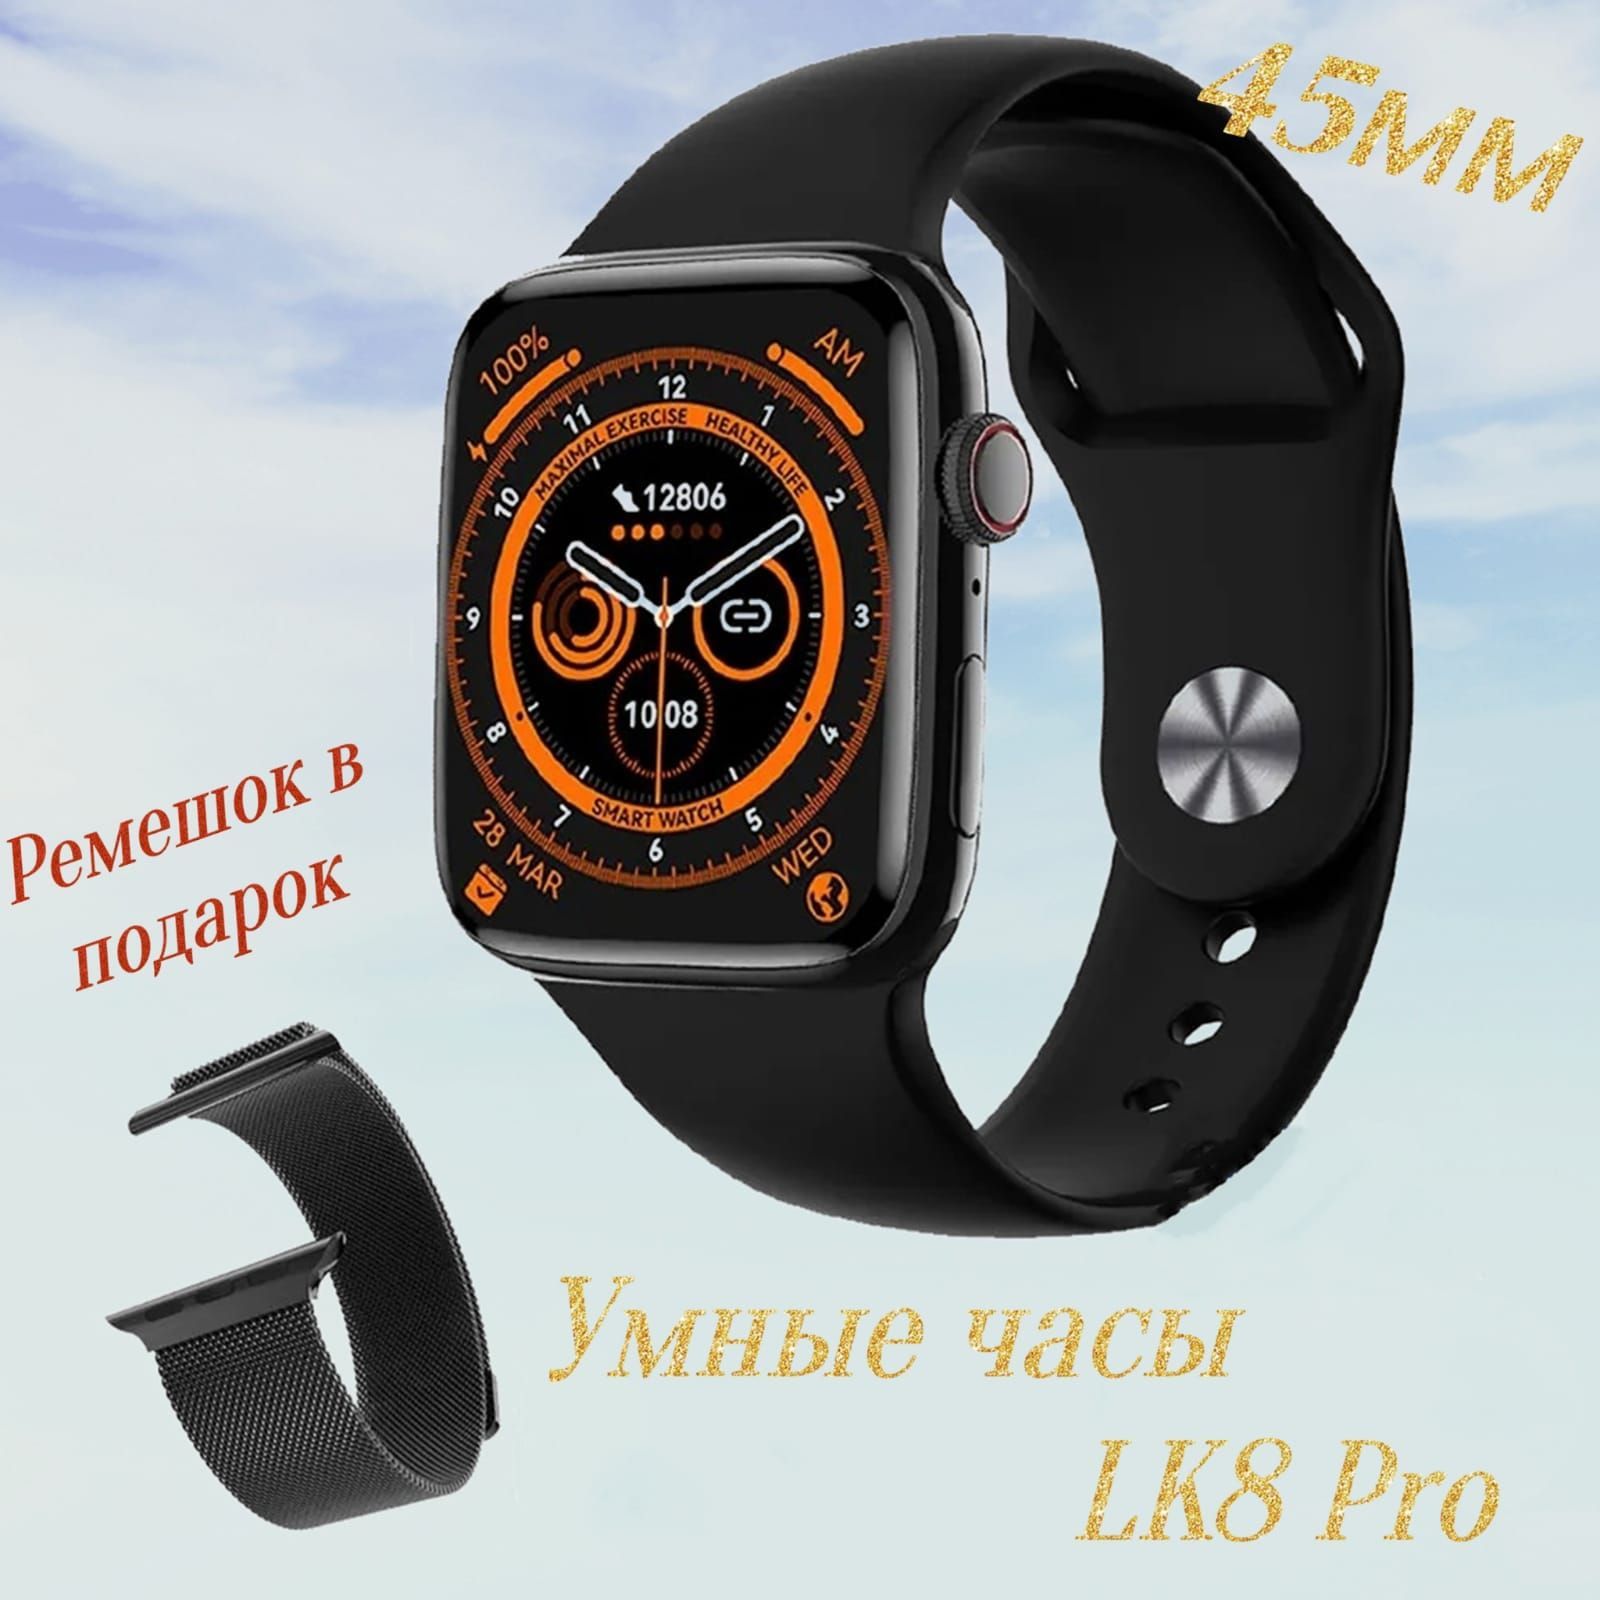 Умные часы lk9 Mini. Часы LK watch 4 экраны. Часы lk15-2123-31. Smart watch ЛК джт4 золотой.